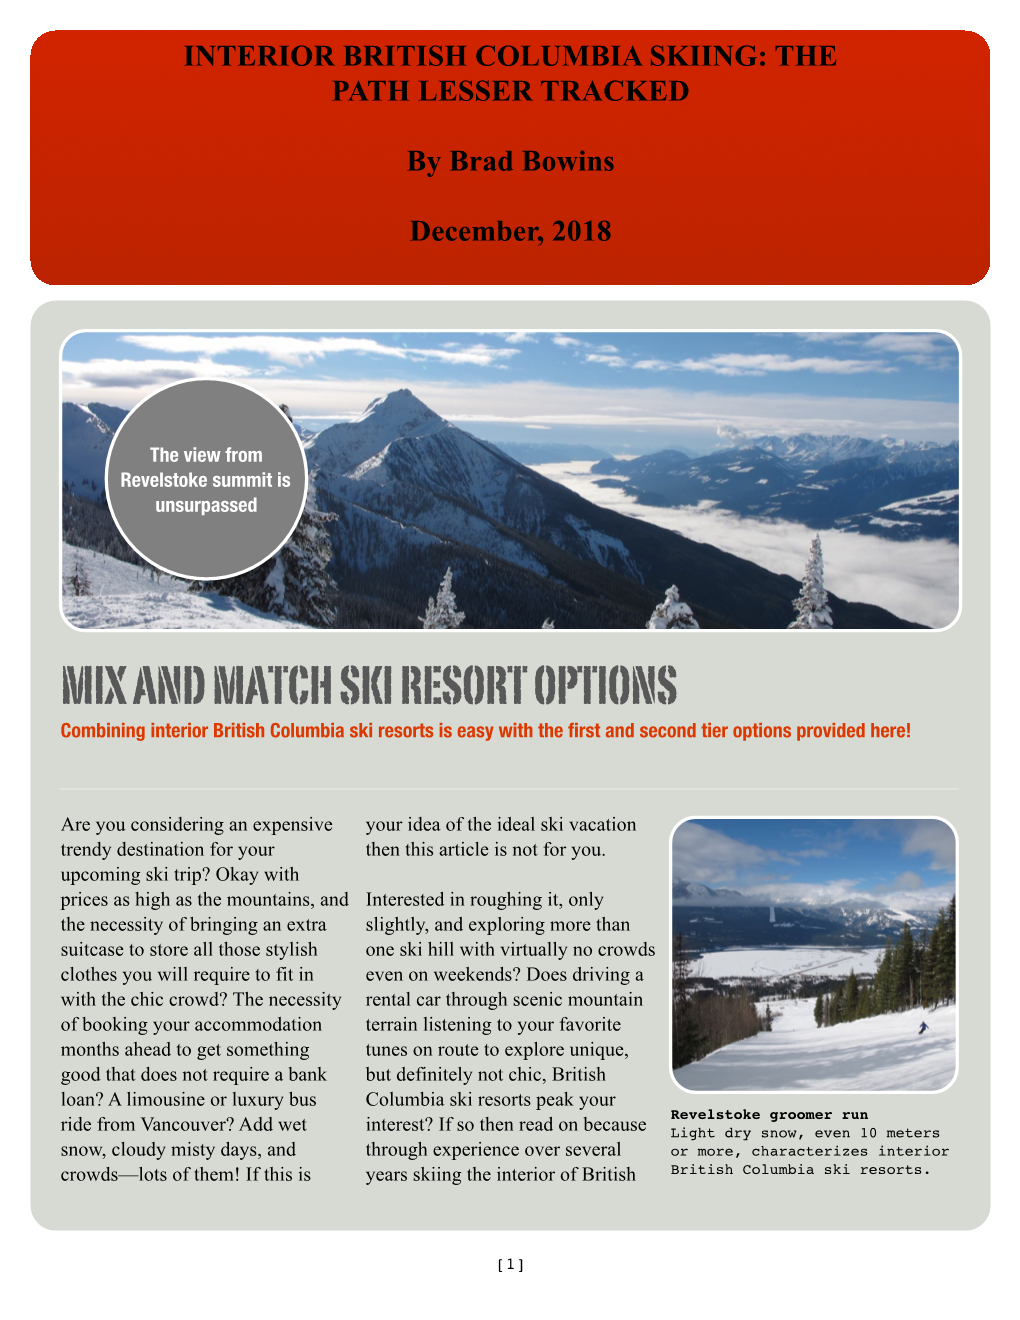 Interior British Columbia Skiing: the Path Lesser Tracked